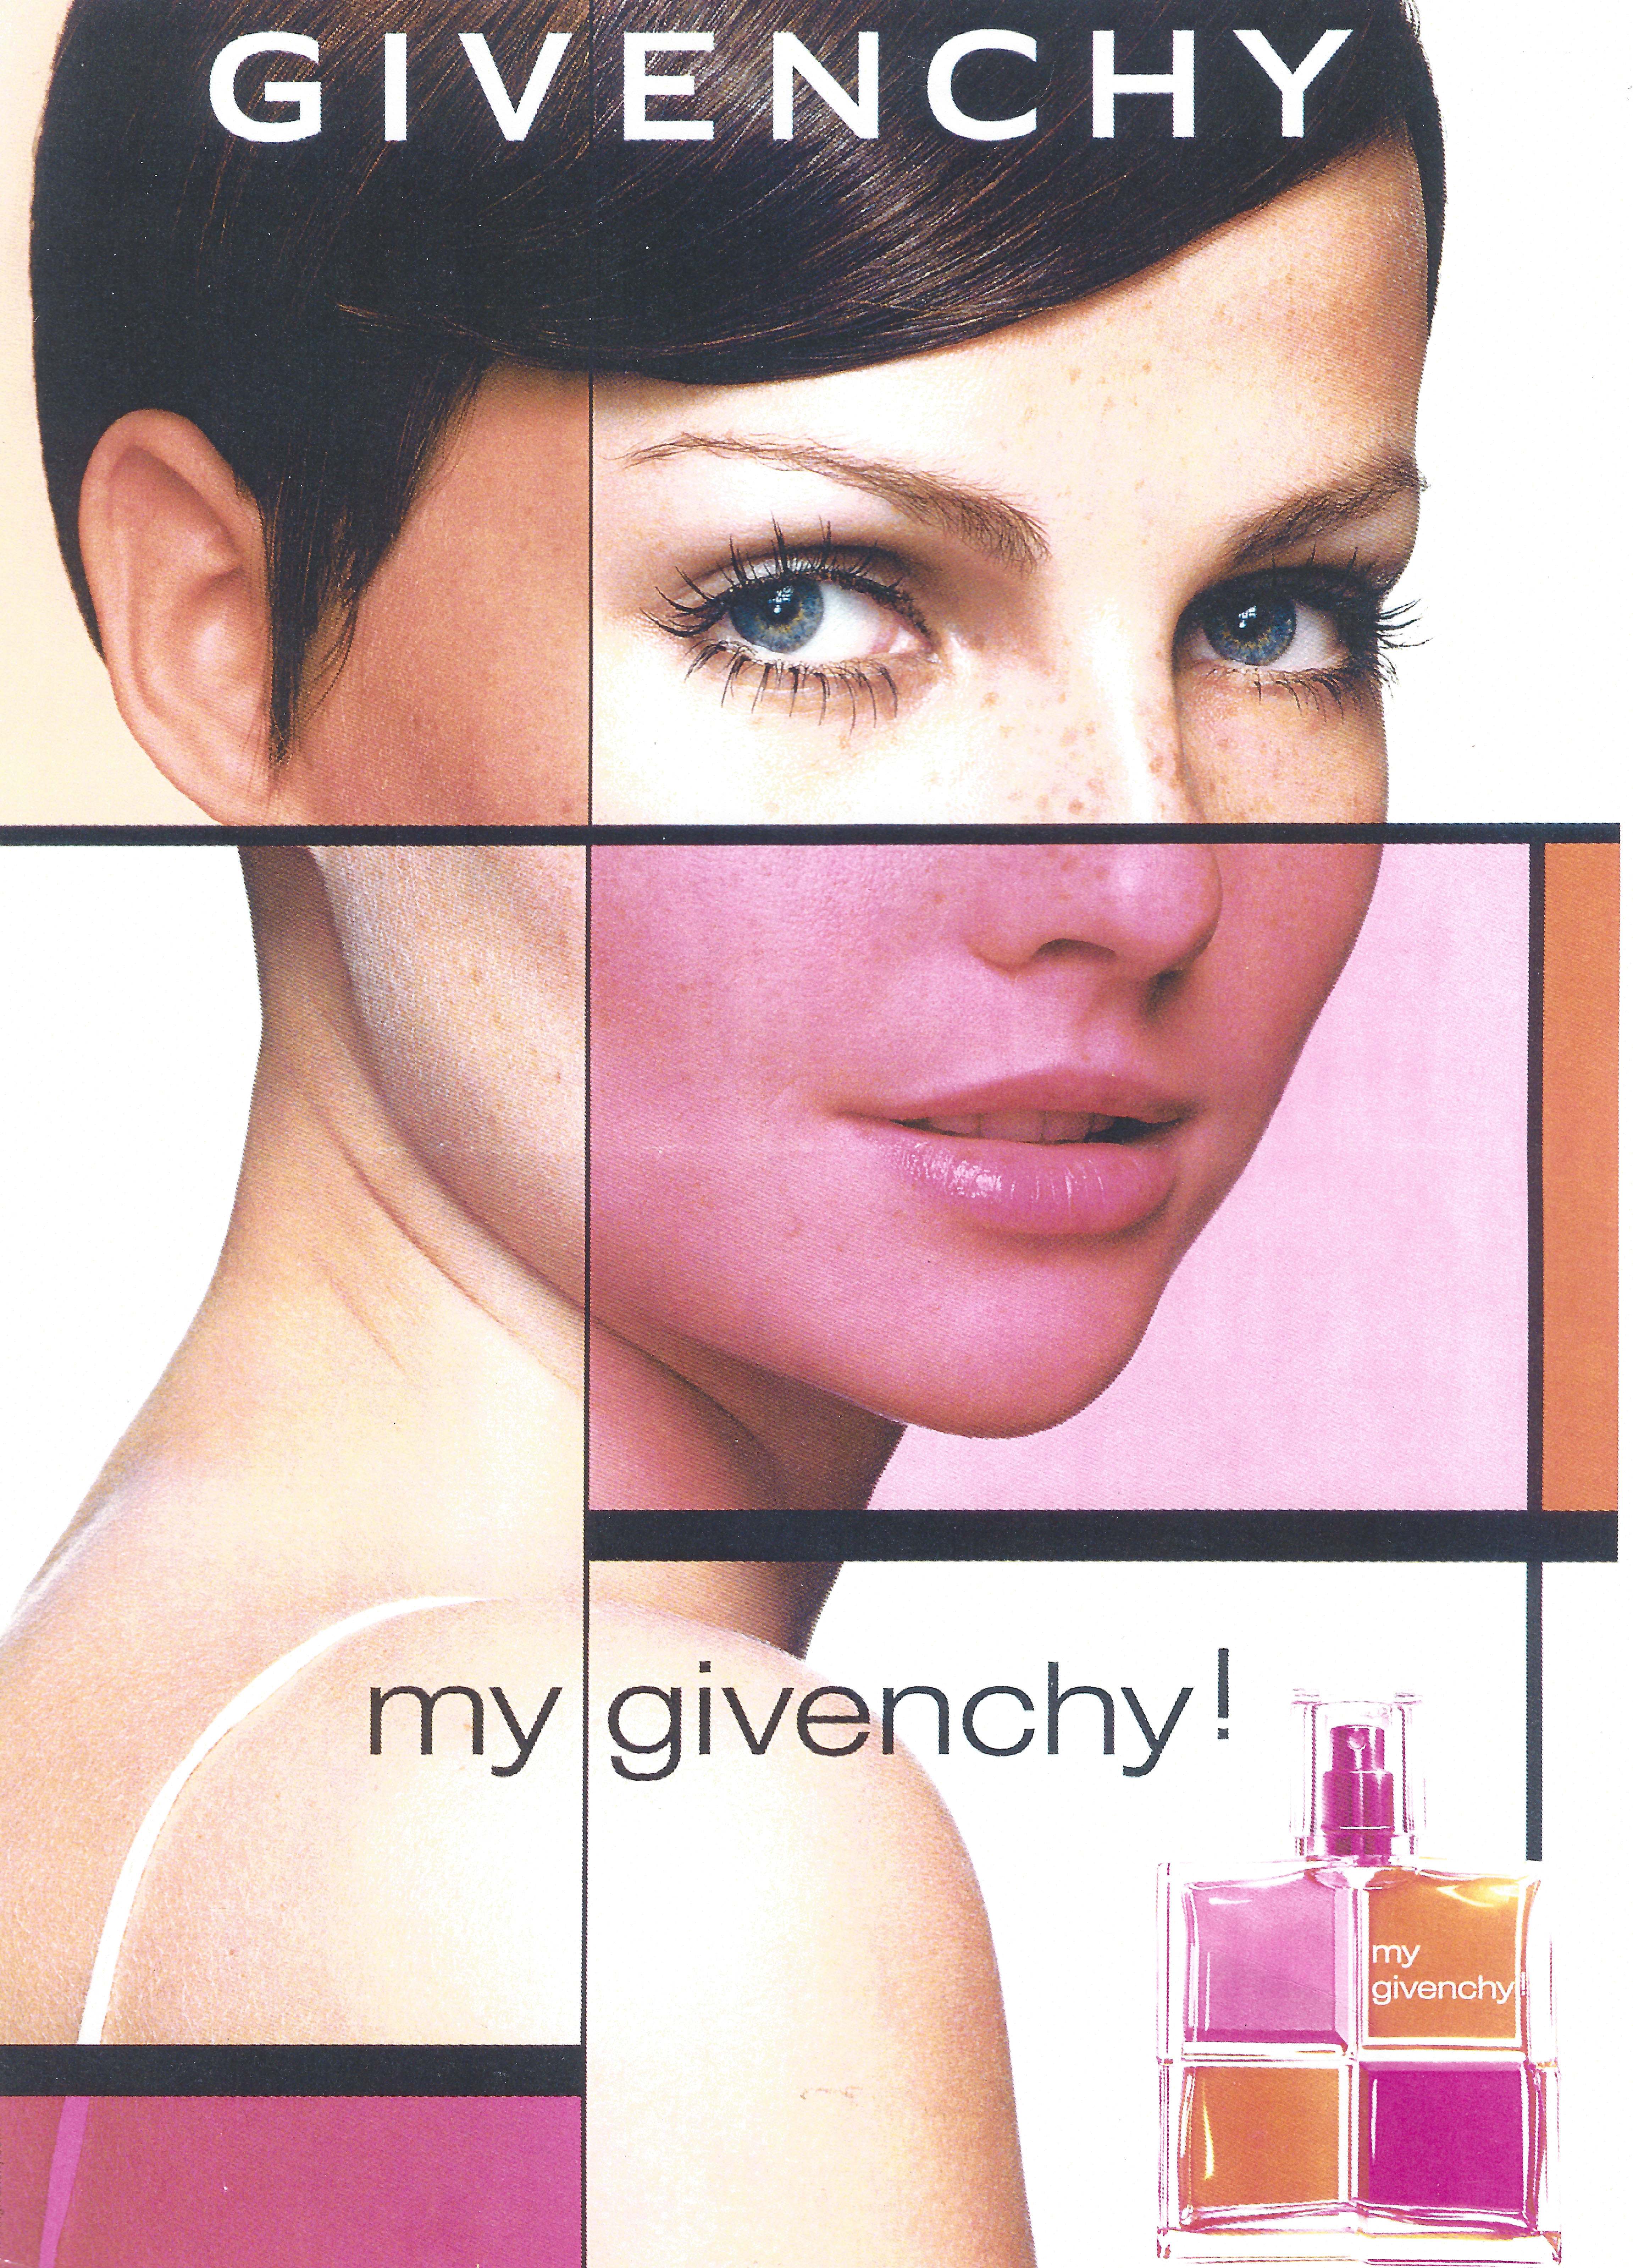 Givenchy perfume